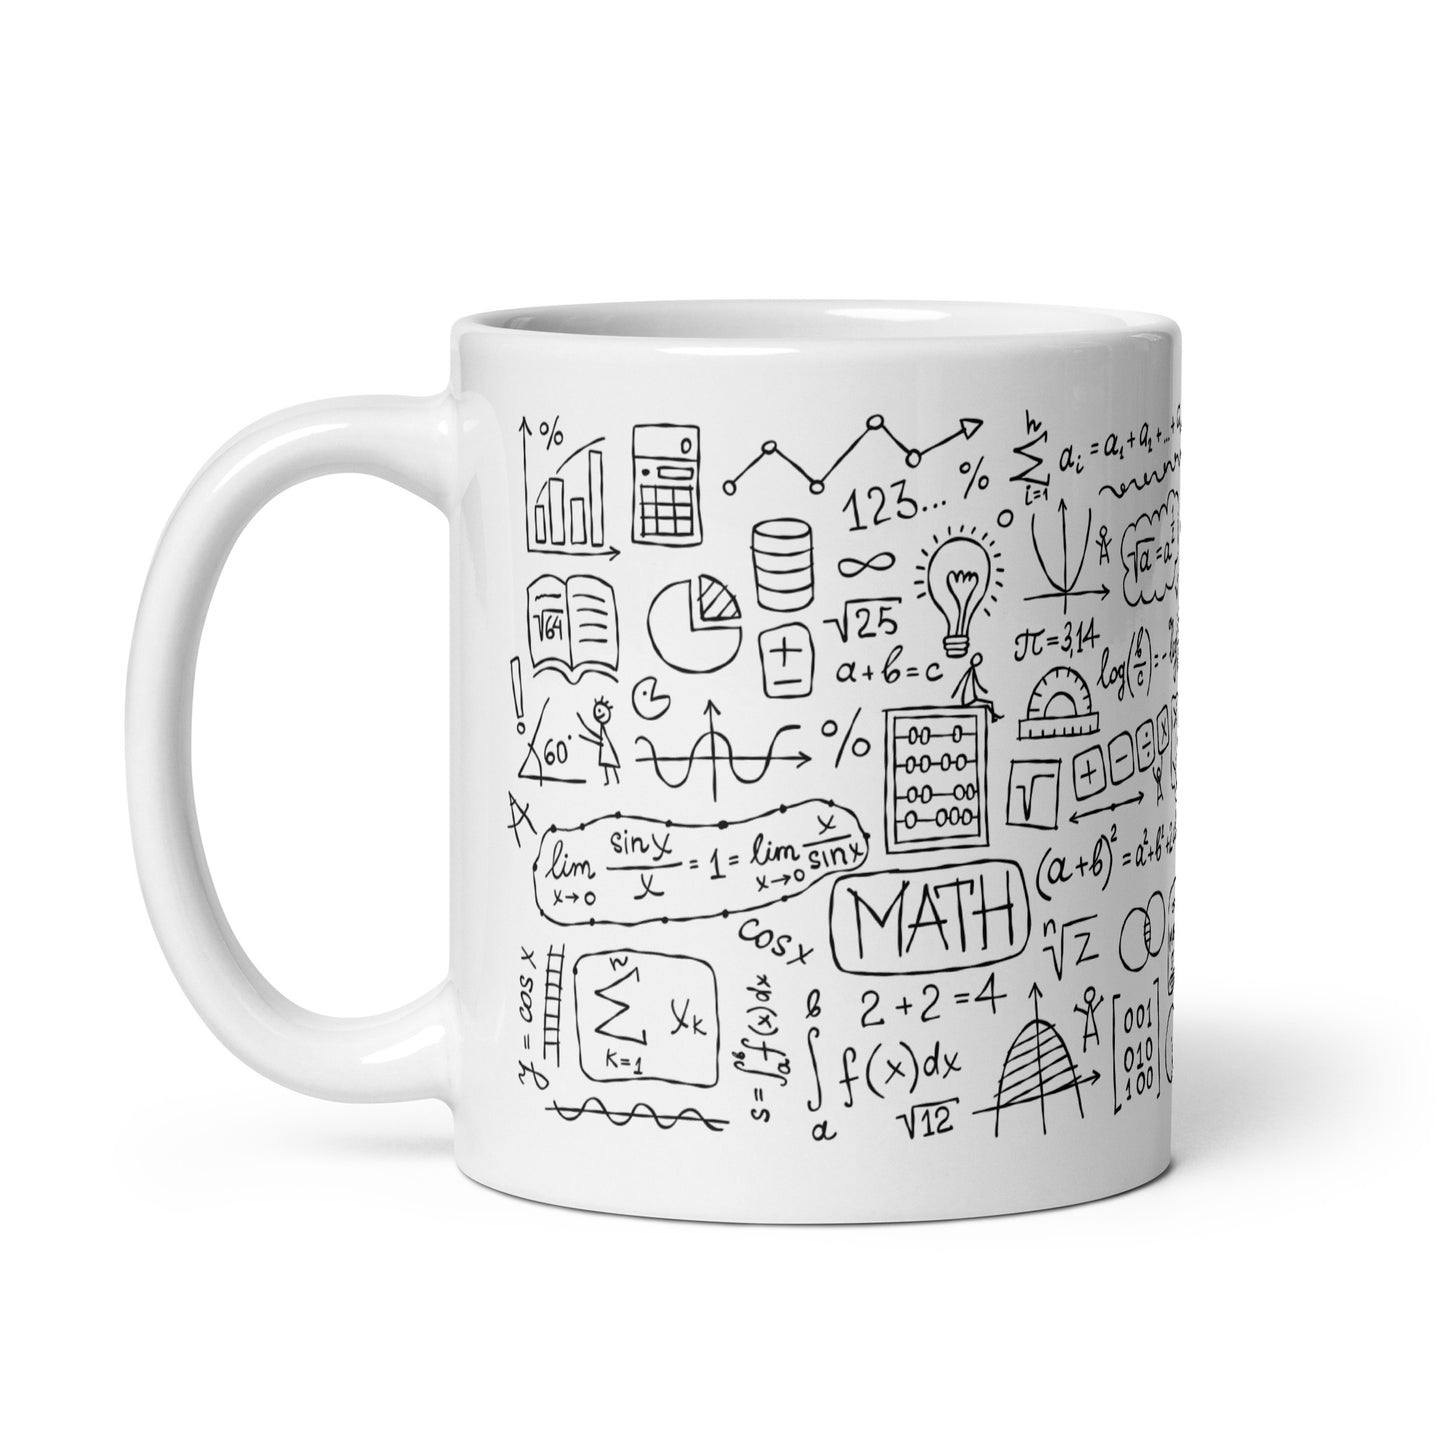 Mathematical Formulas and Symbols. Personalised Gift Mug for Teachers, Students, and STEM Enthusiasts kudrylab